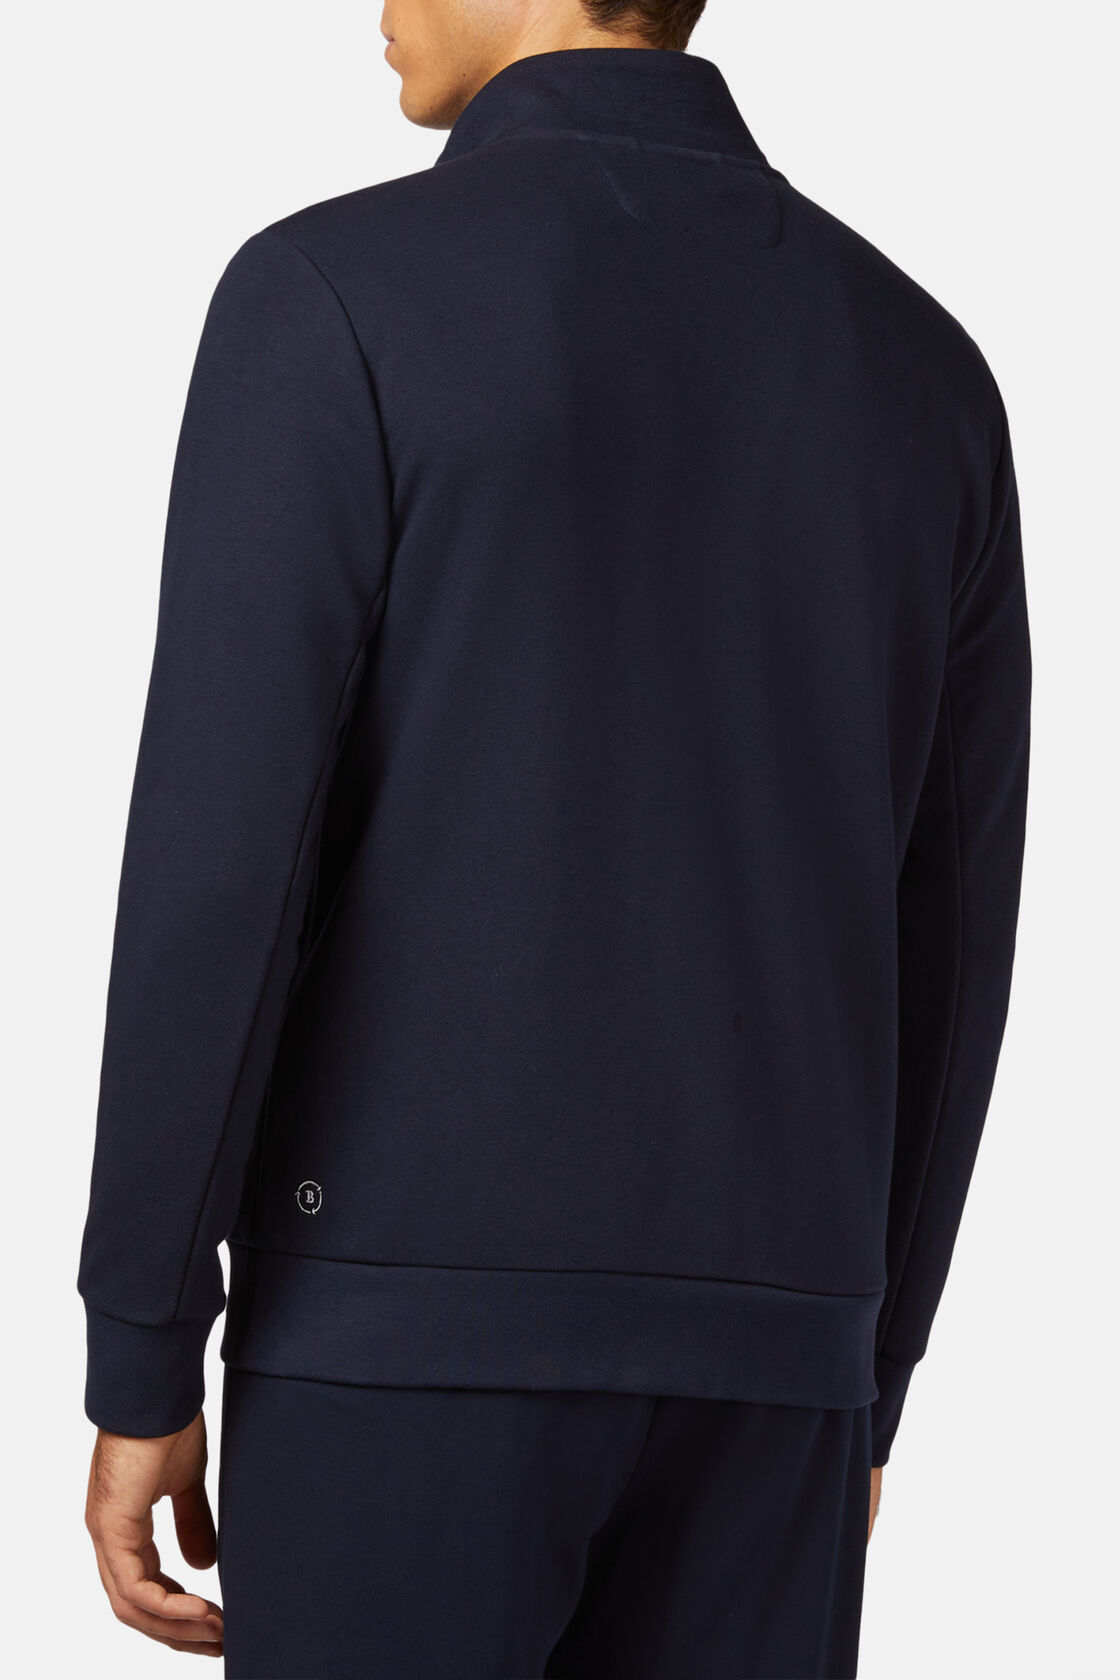 Full Zip Sweatshirt in Recycled Mixed Cotton, Navy blue, hi-res